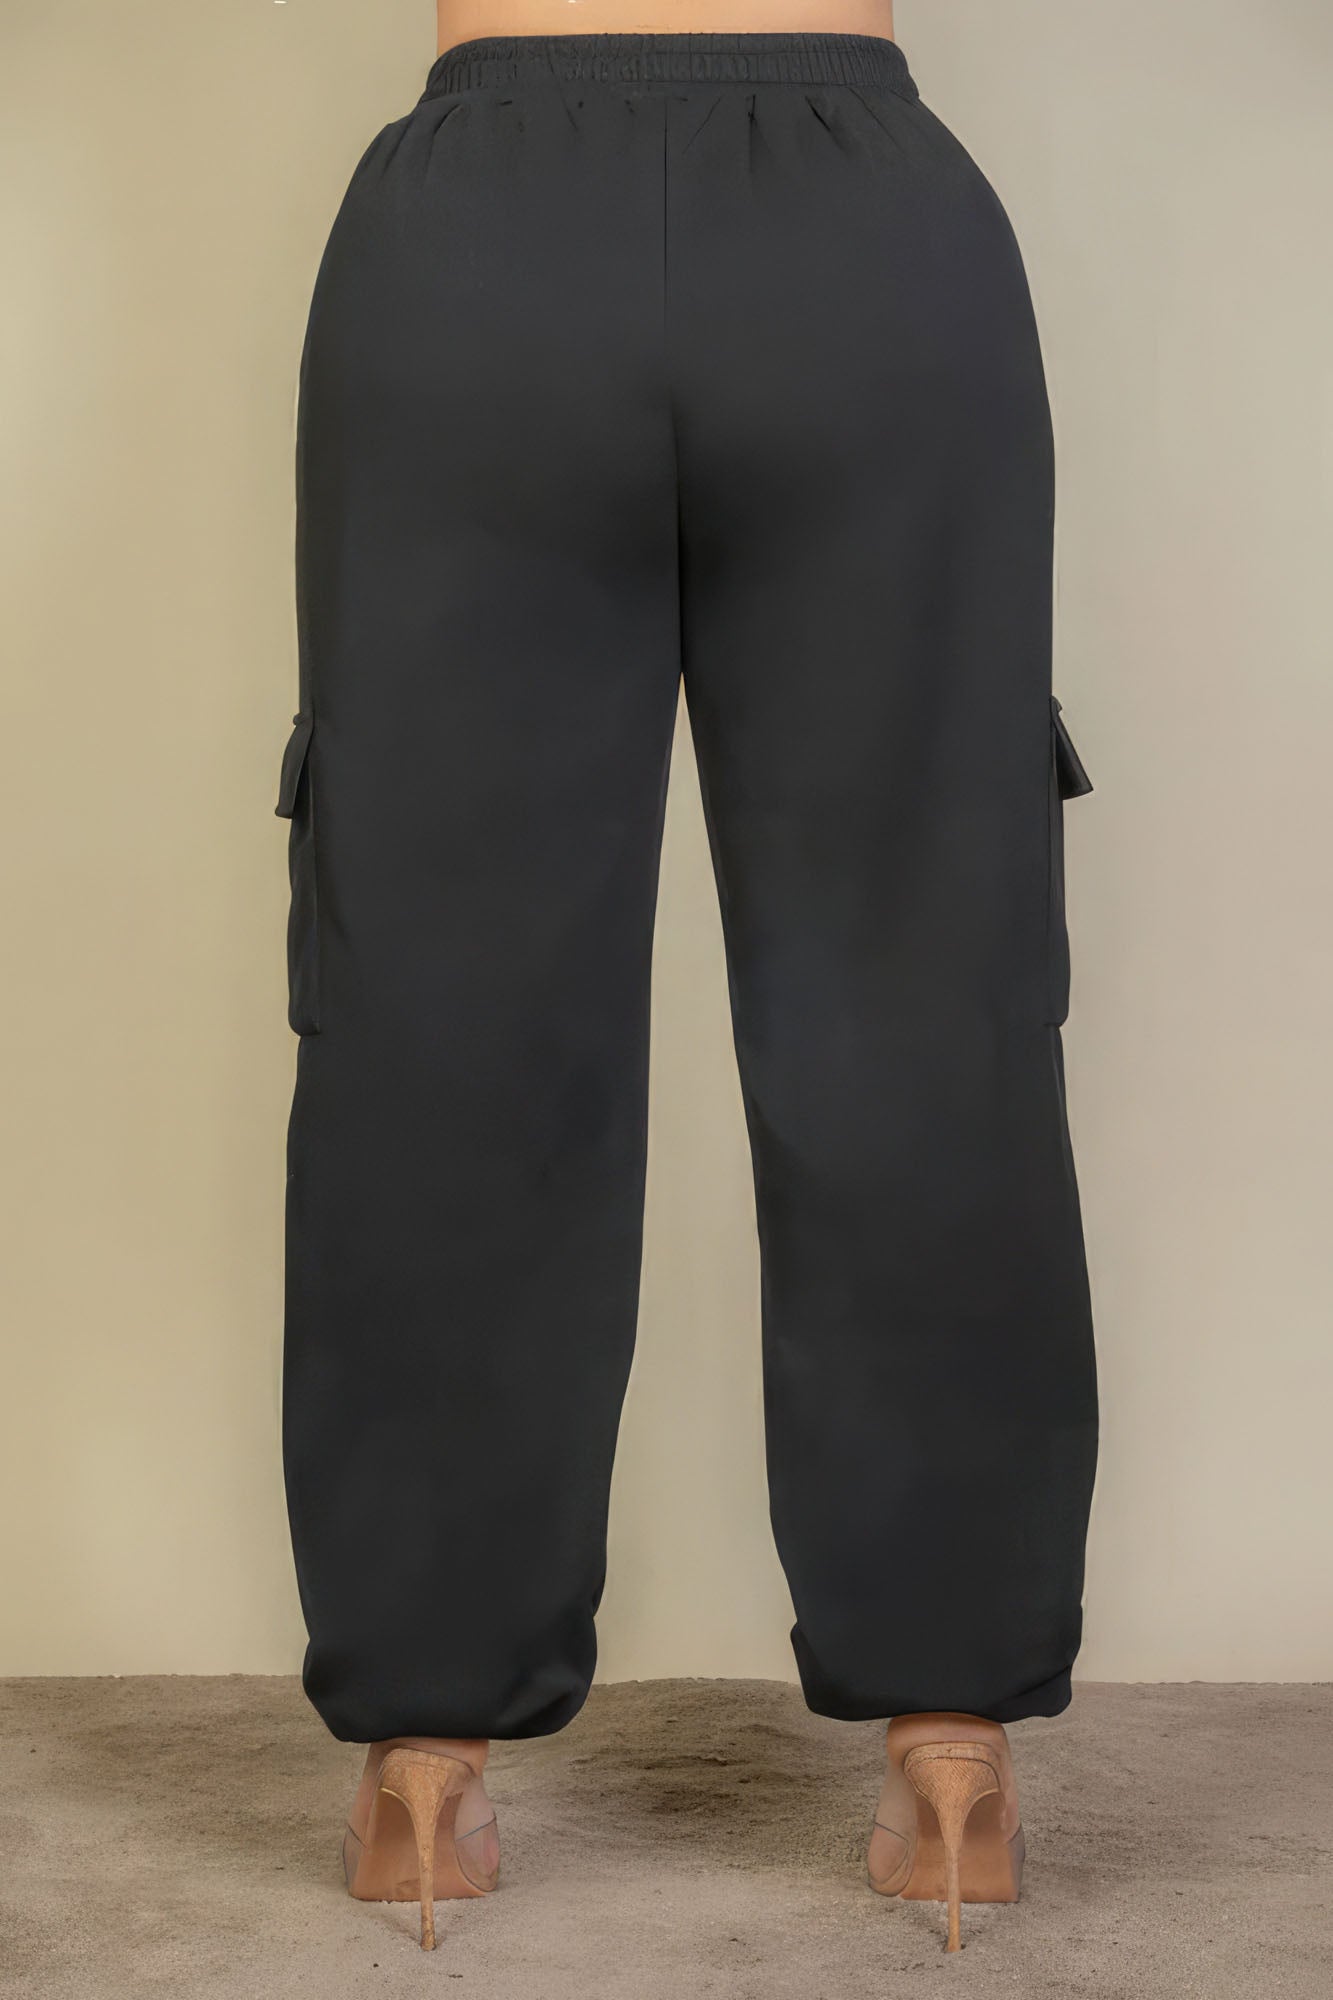 THE VANESSA Plus Size Side Pocket Drawstring Waist Sweatpants